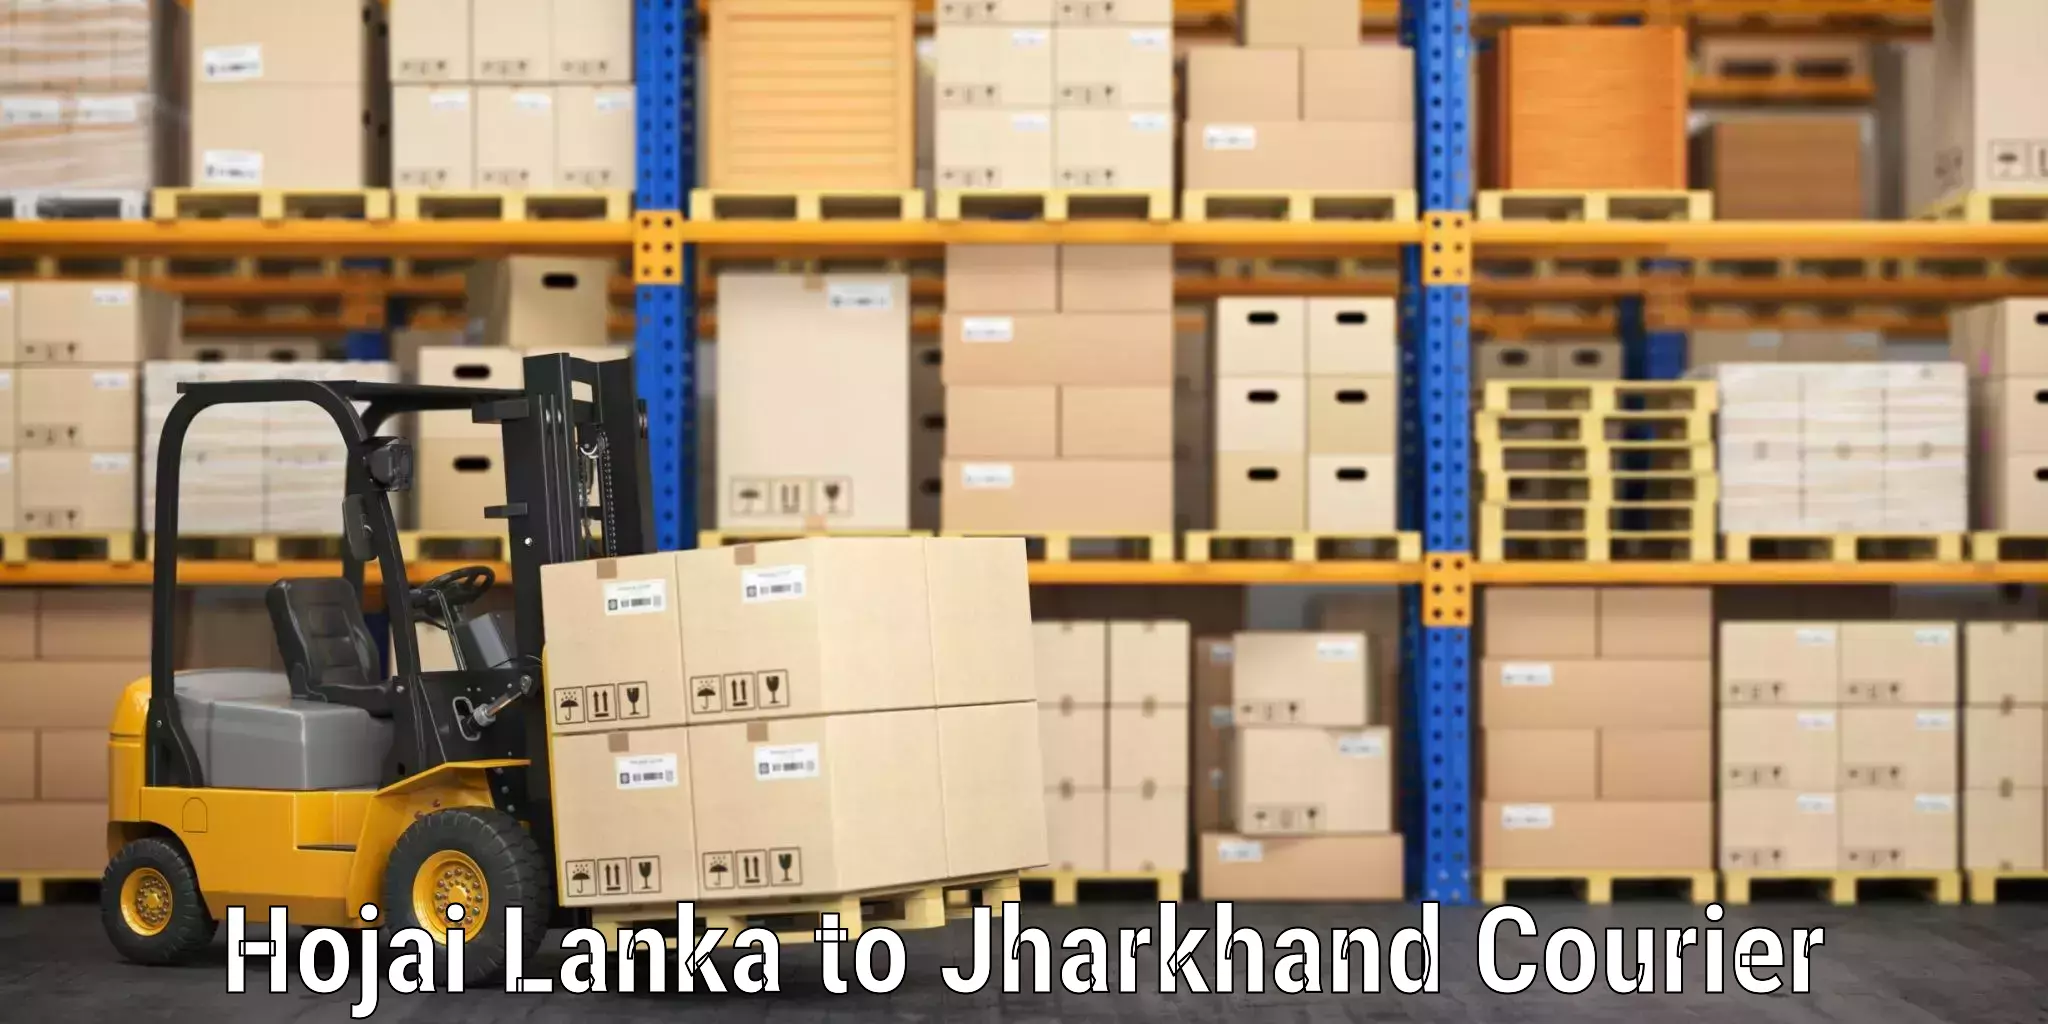 Luggage shipment tracking Hojai Lanka to Bundu